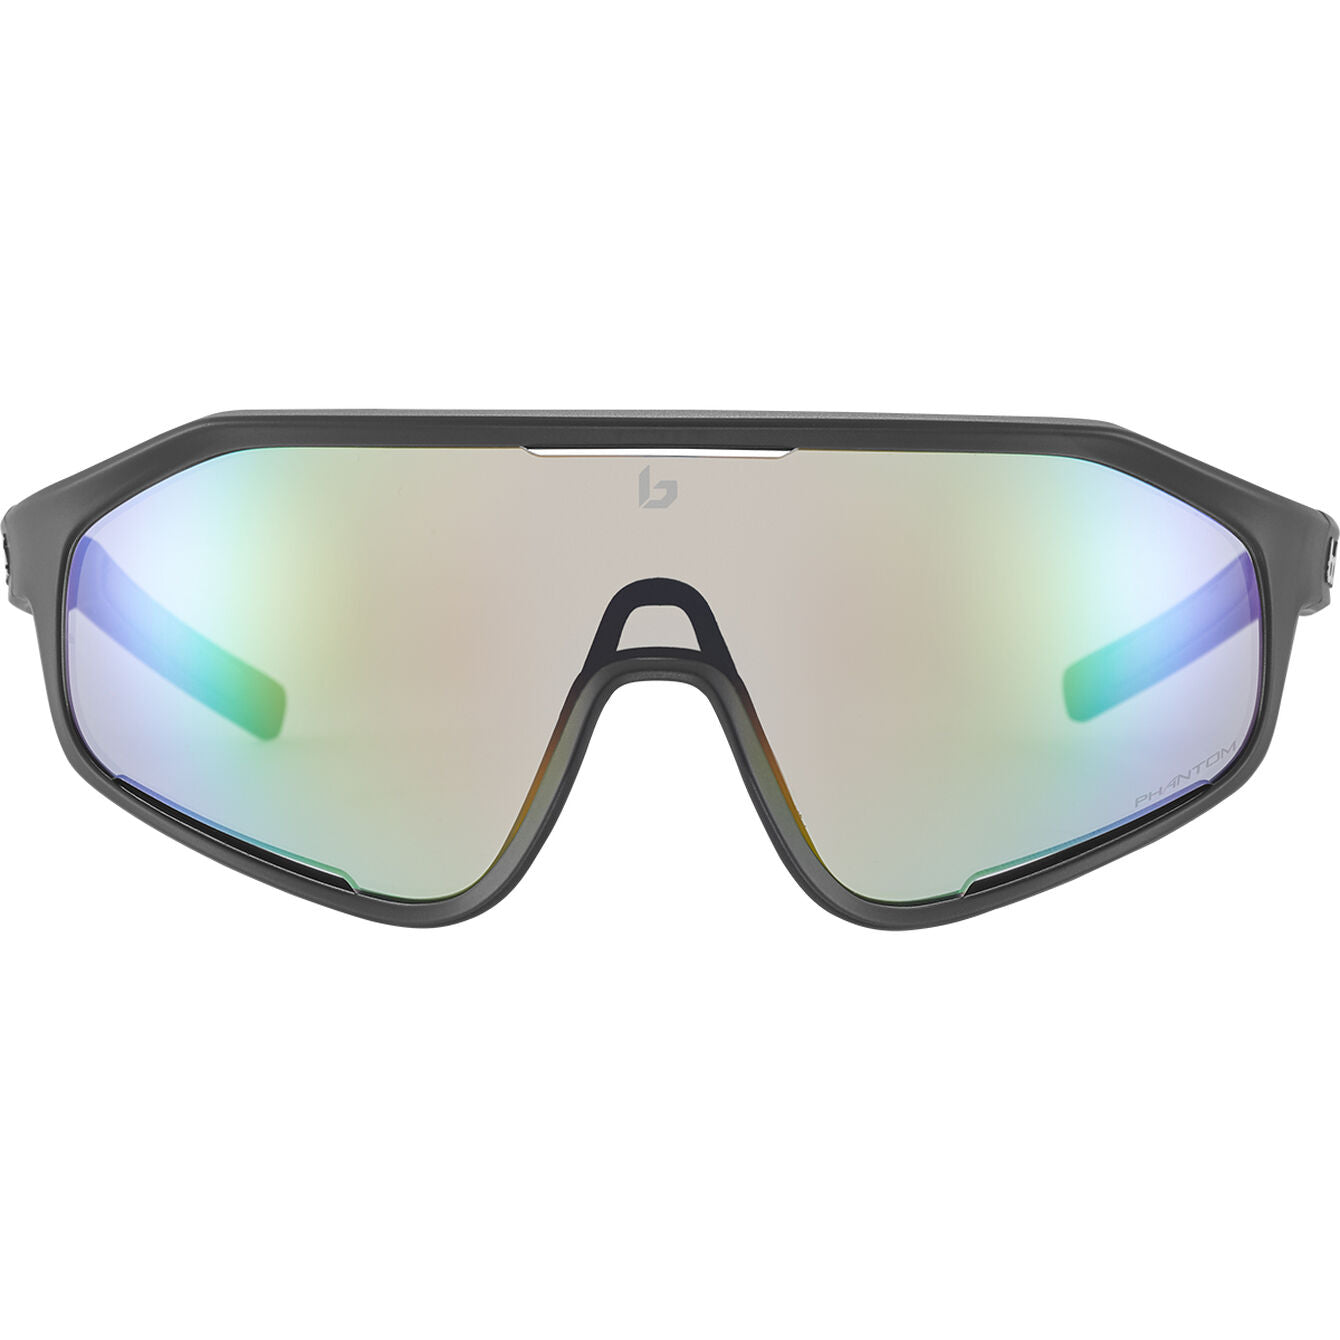 Bolle SHIFTER BS010005 Sunglasses - Black Matte - Phantom Clear Green 02